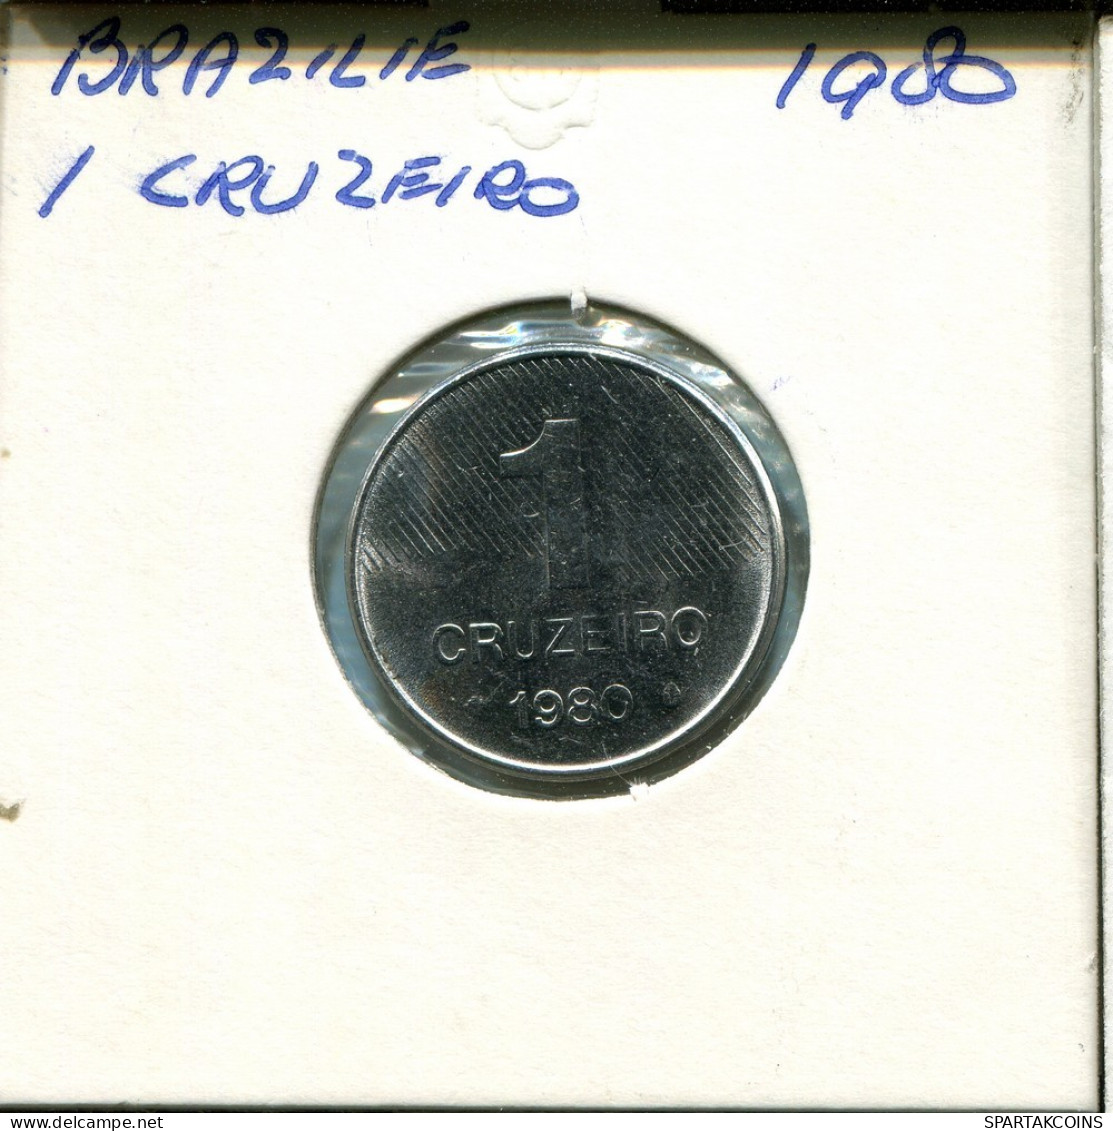 1 CRUZEIRO 1980 BRAZIL Coin #AR308.U.A - Brasilien